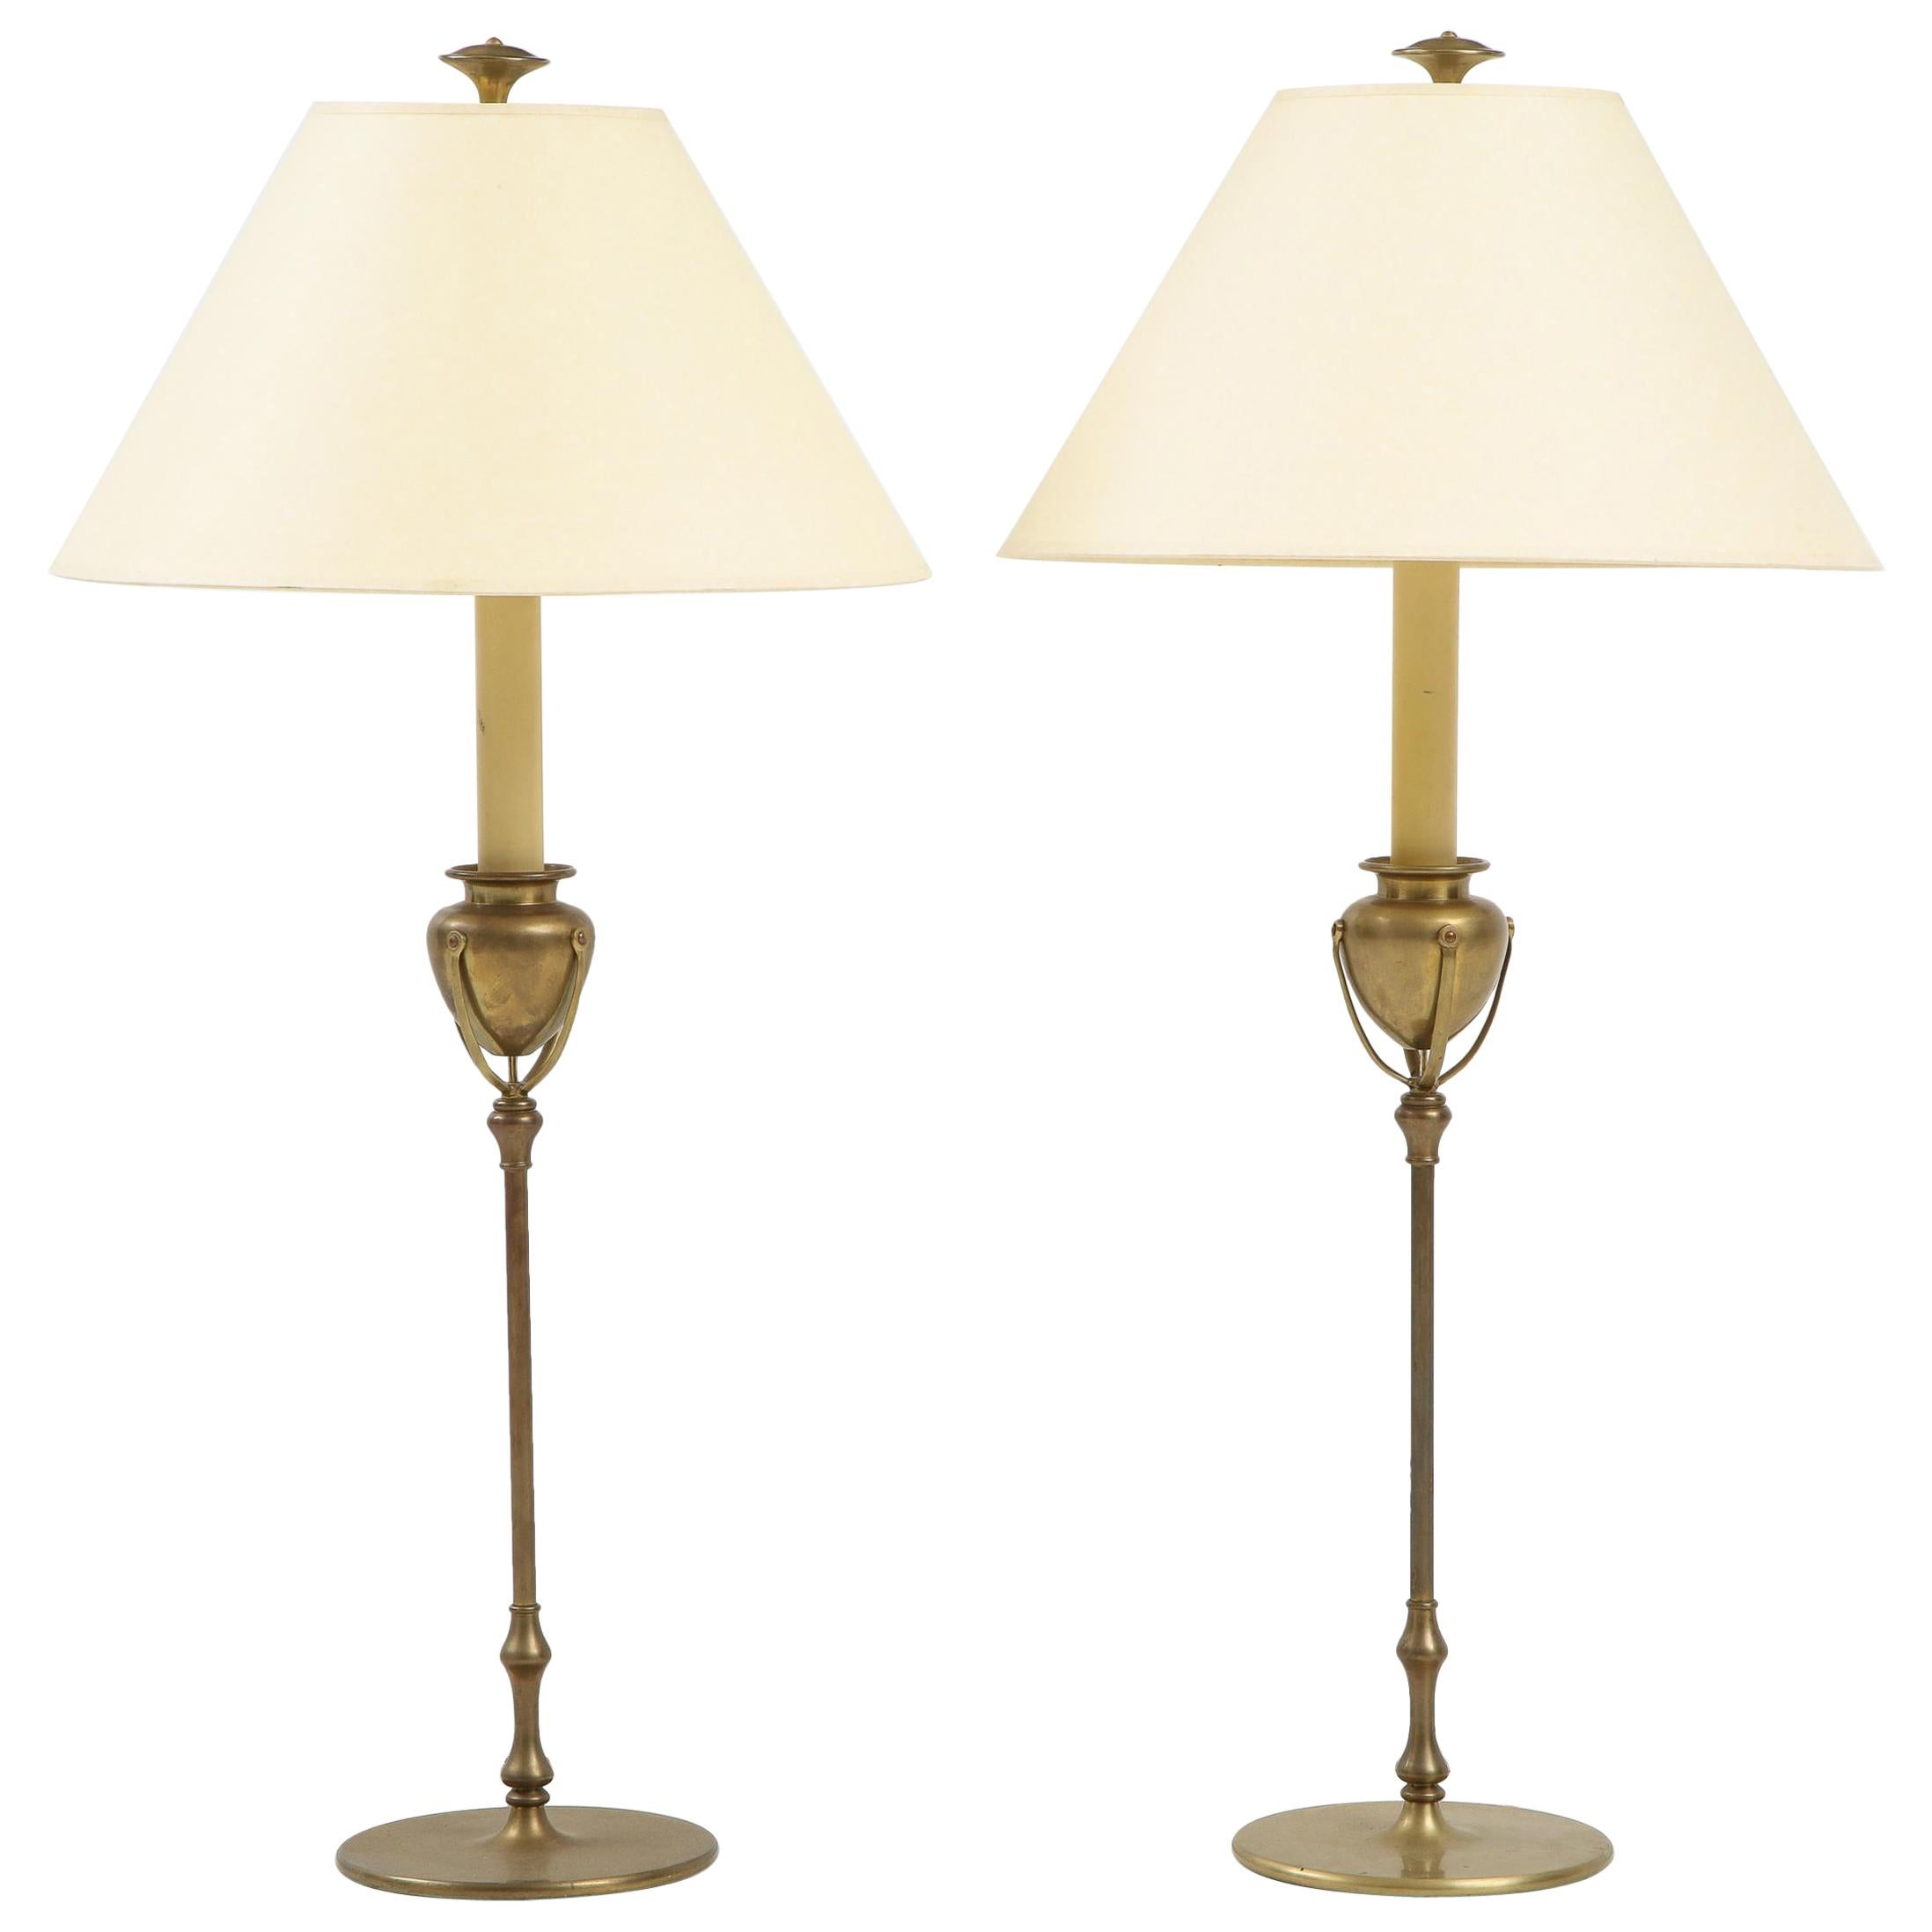 Pair of Louis Comfort Tiffany Inspired Lamps